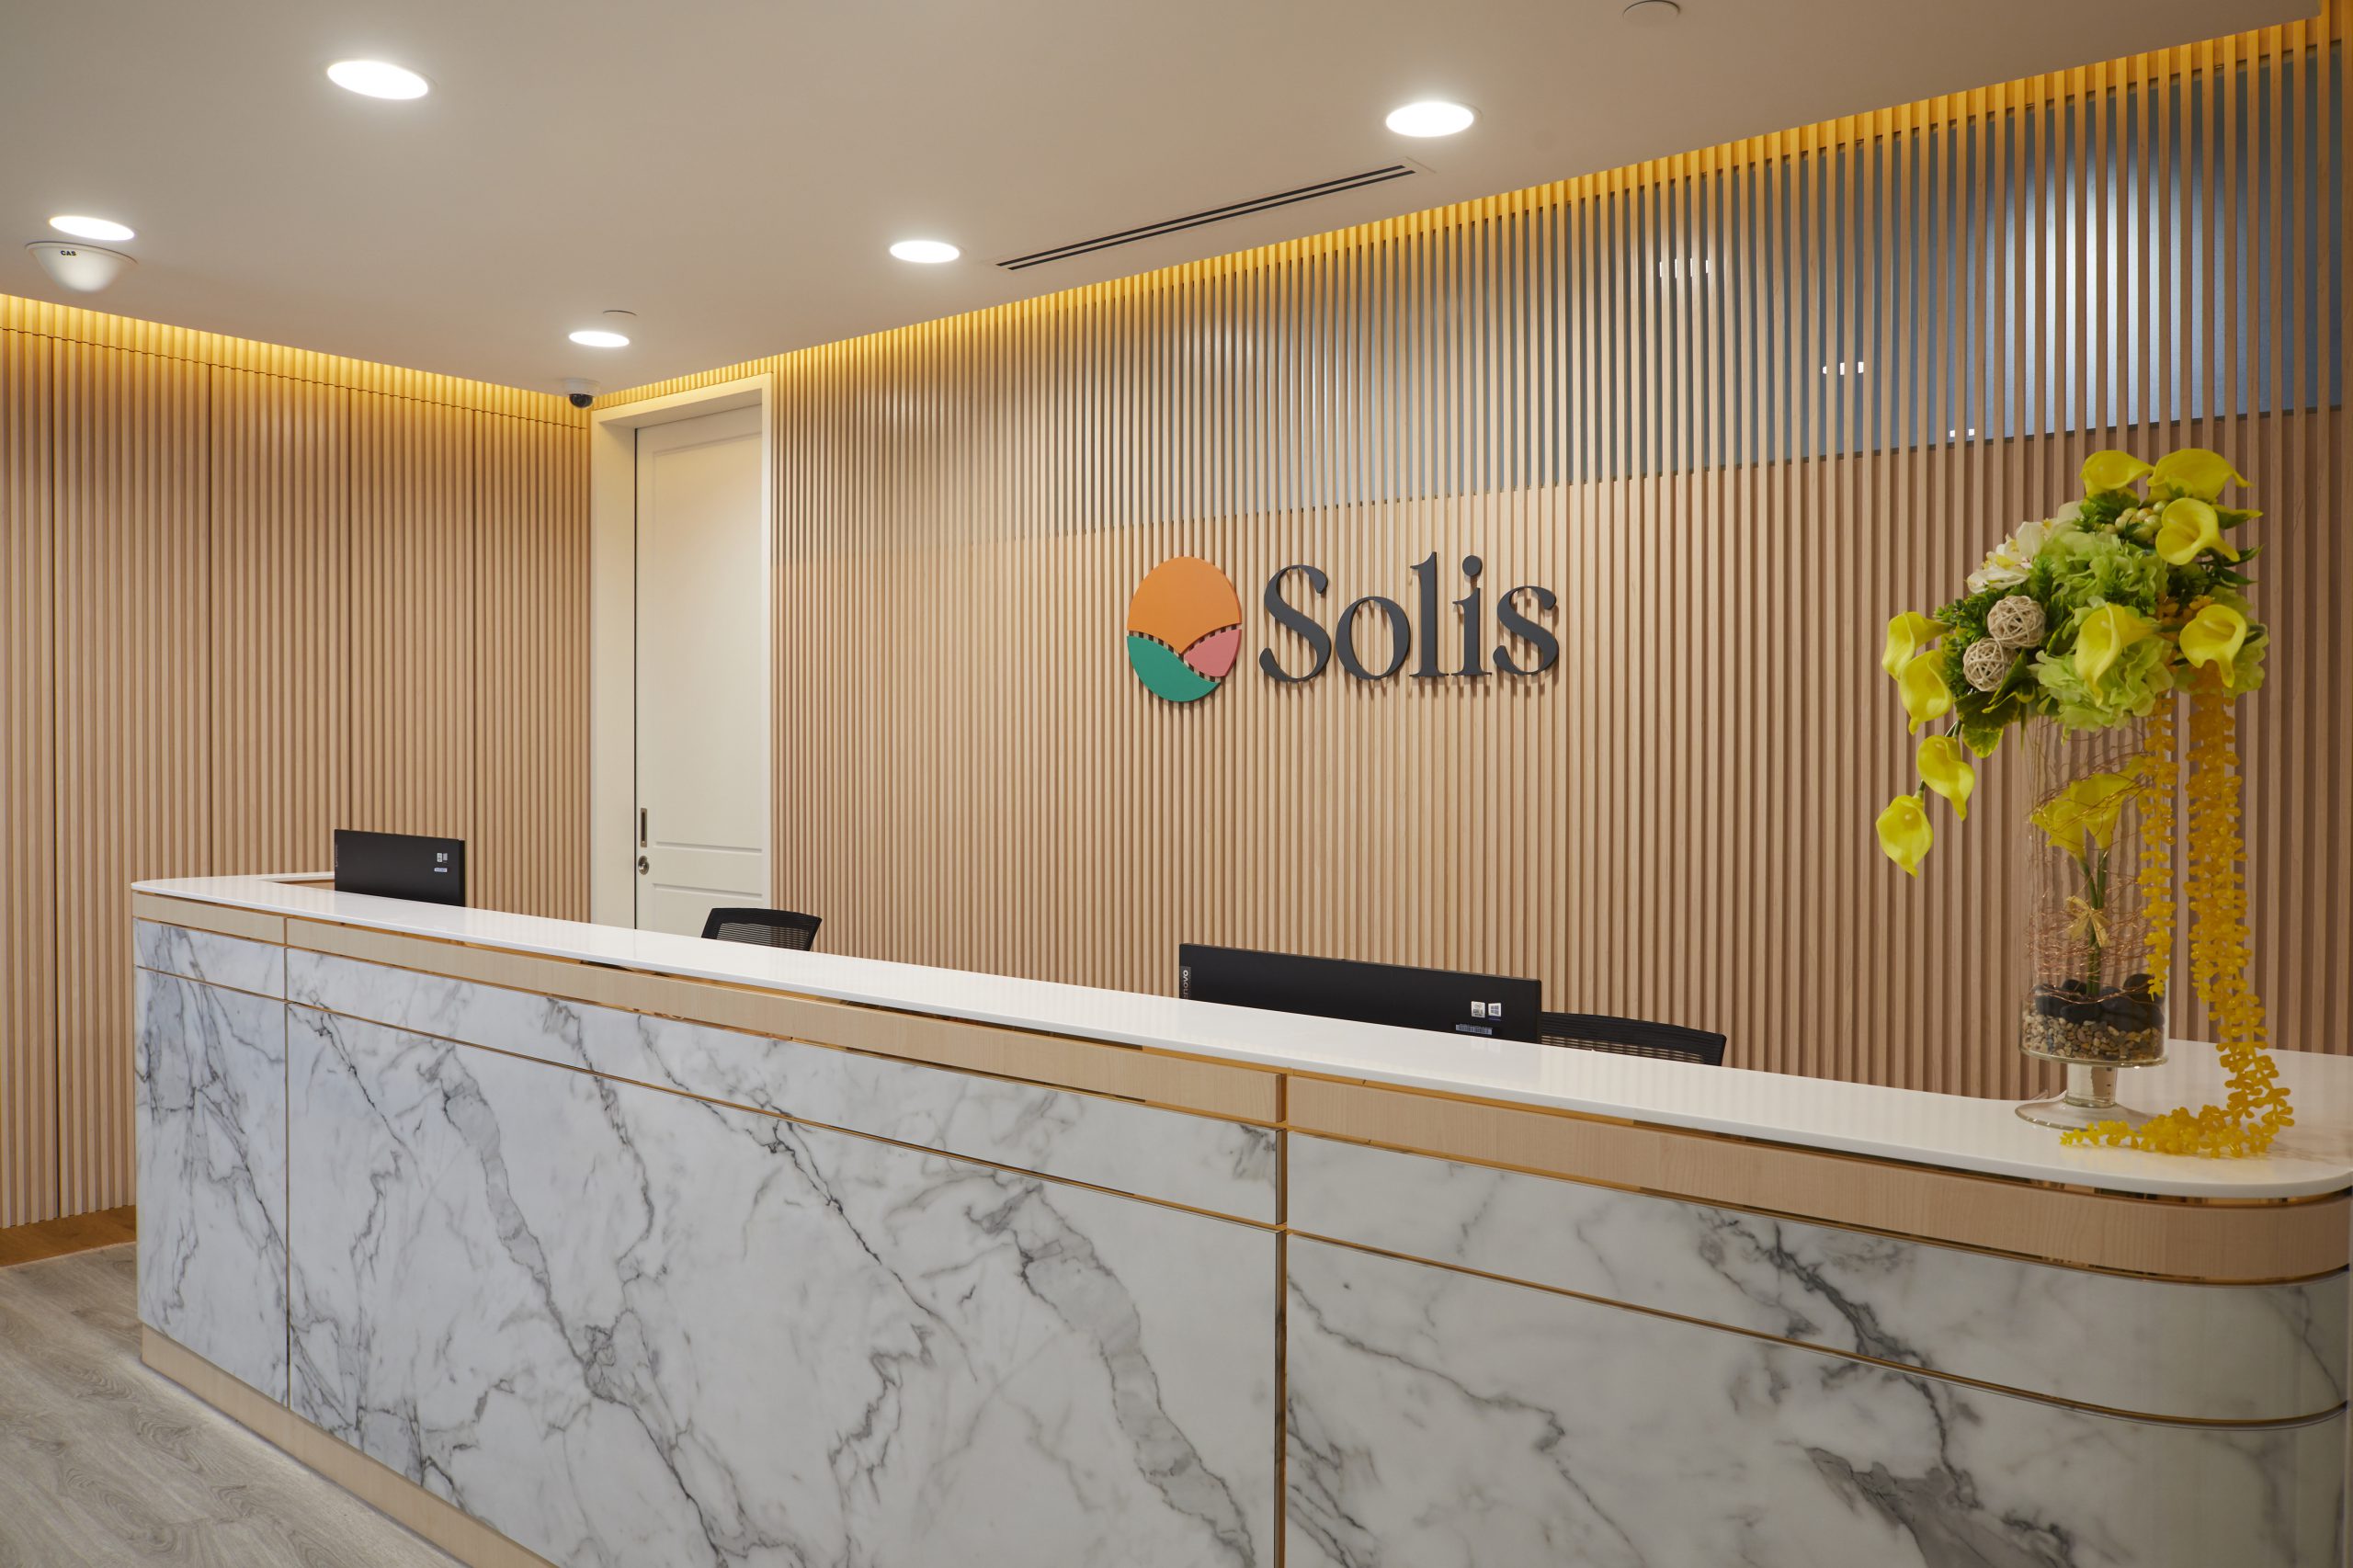 Solis Breast Care & Surgery Centre